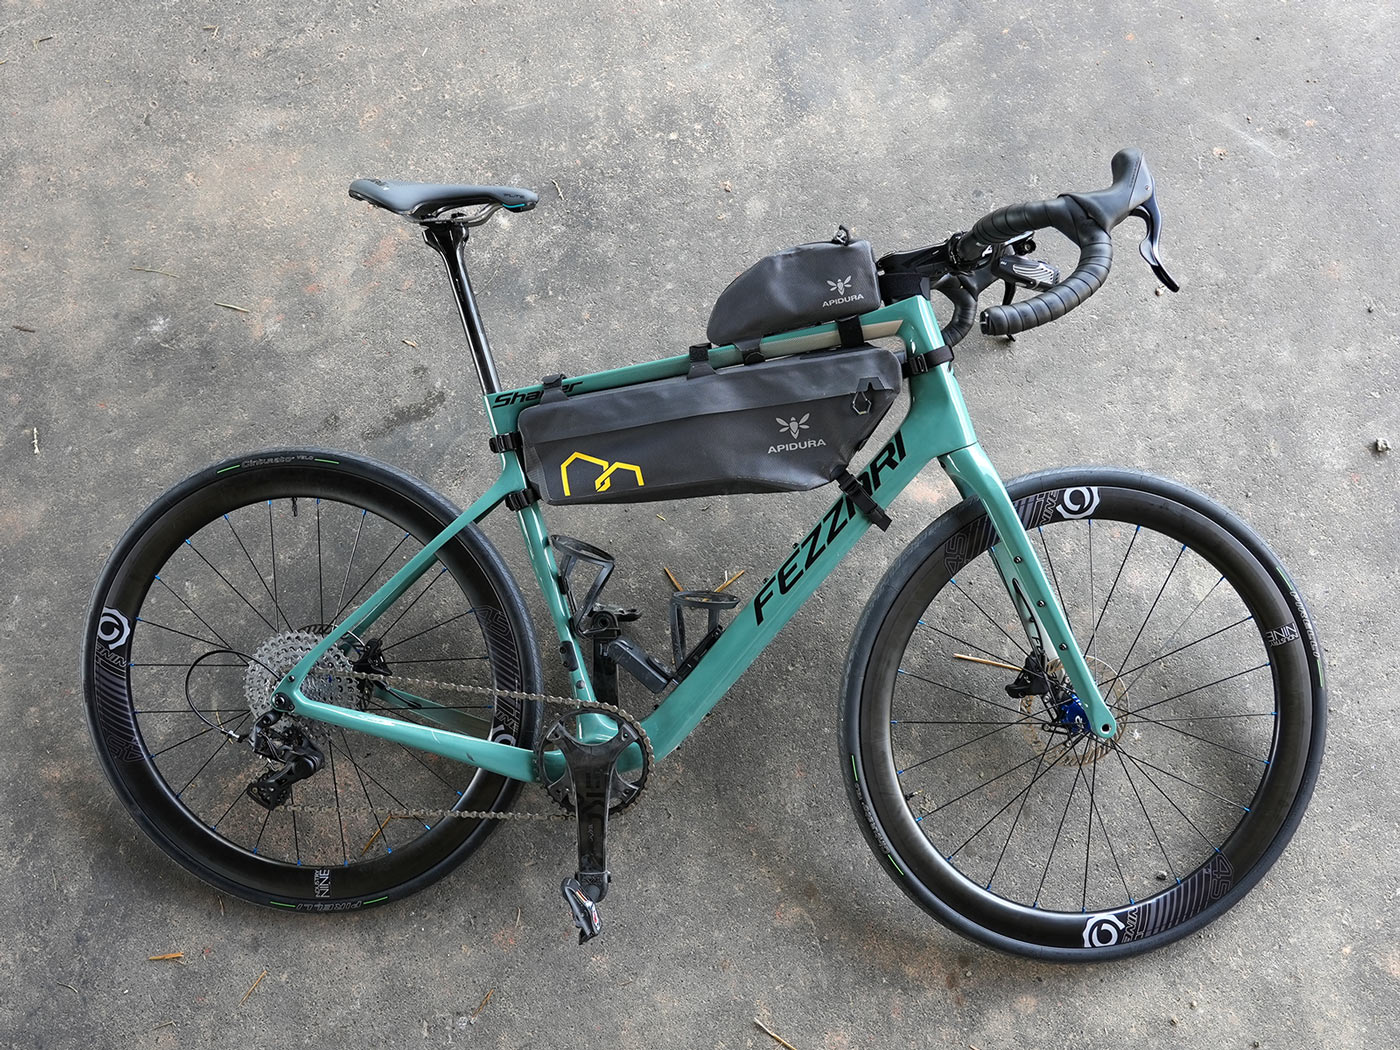 fezzari shafer gravel bike with road wheels and frame bags